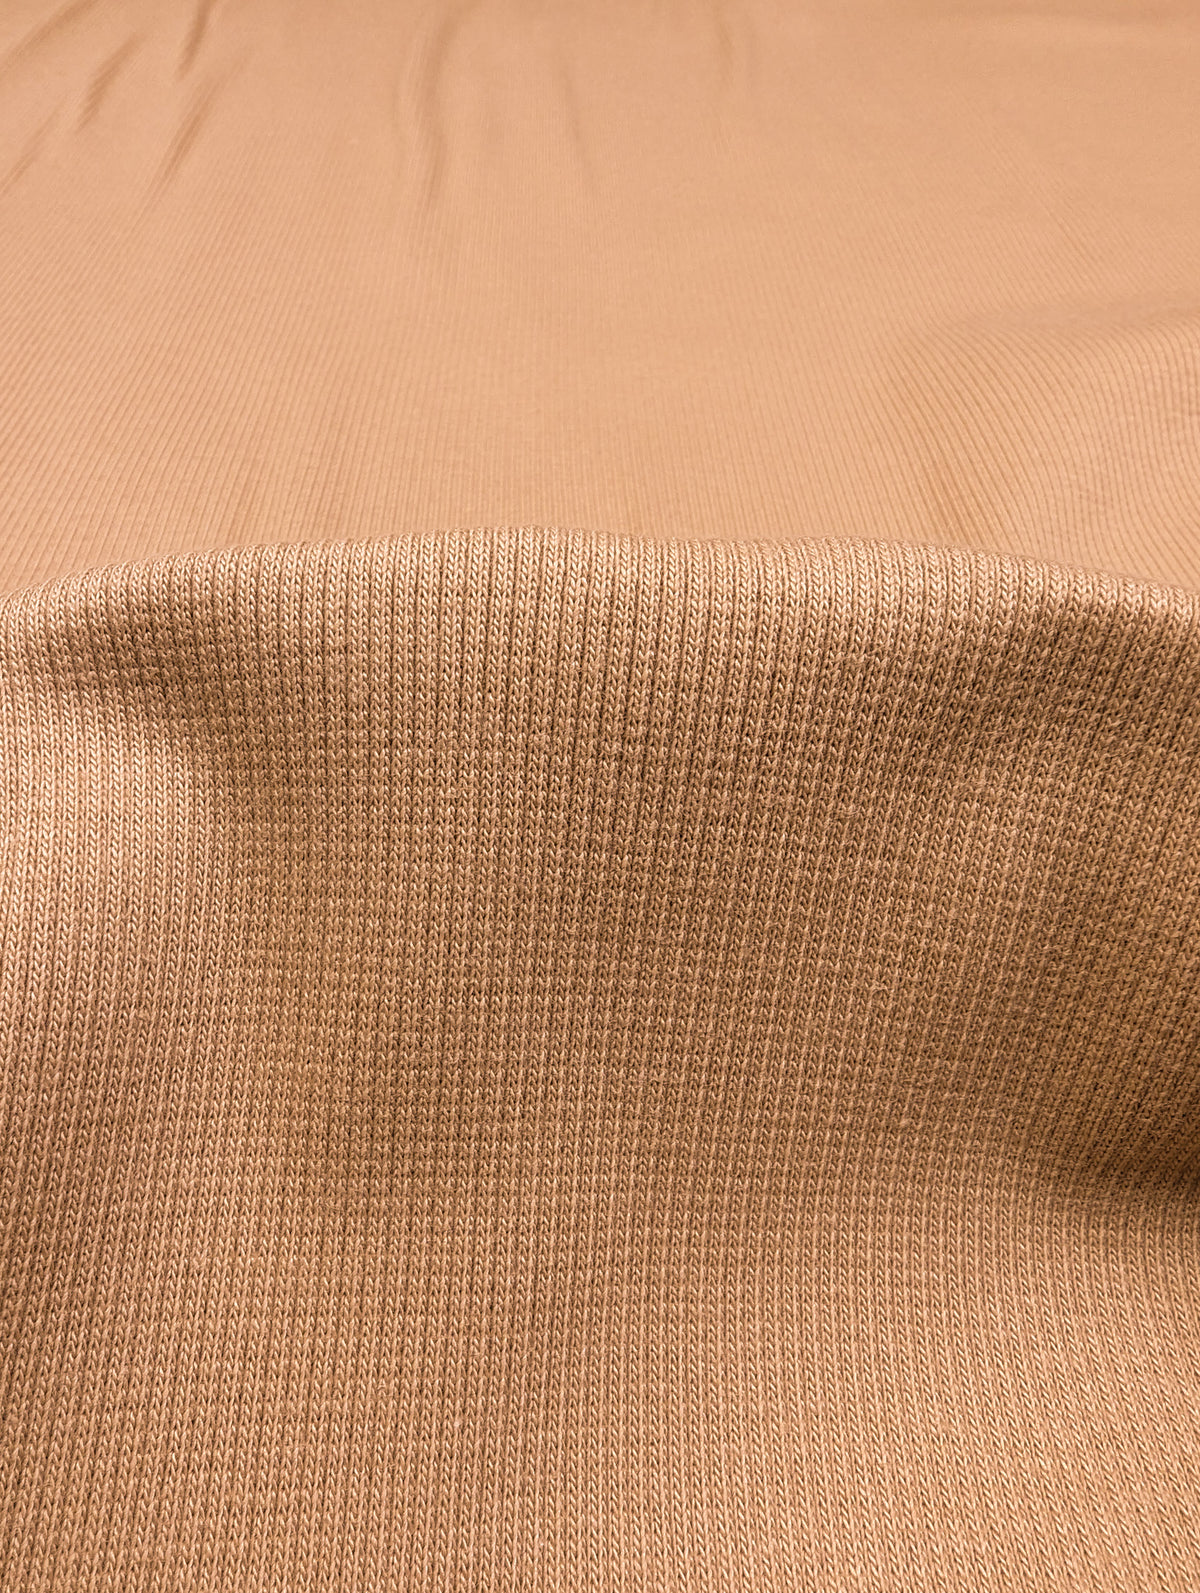 Cotton Jersey Baby Rib Knit - Family Fabrics Coordinate - Light Taupe